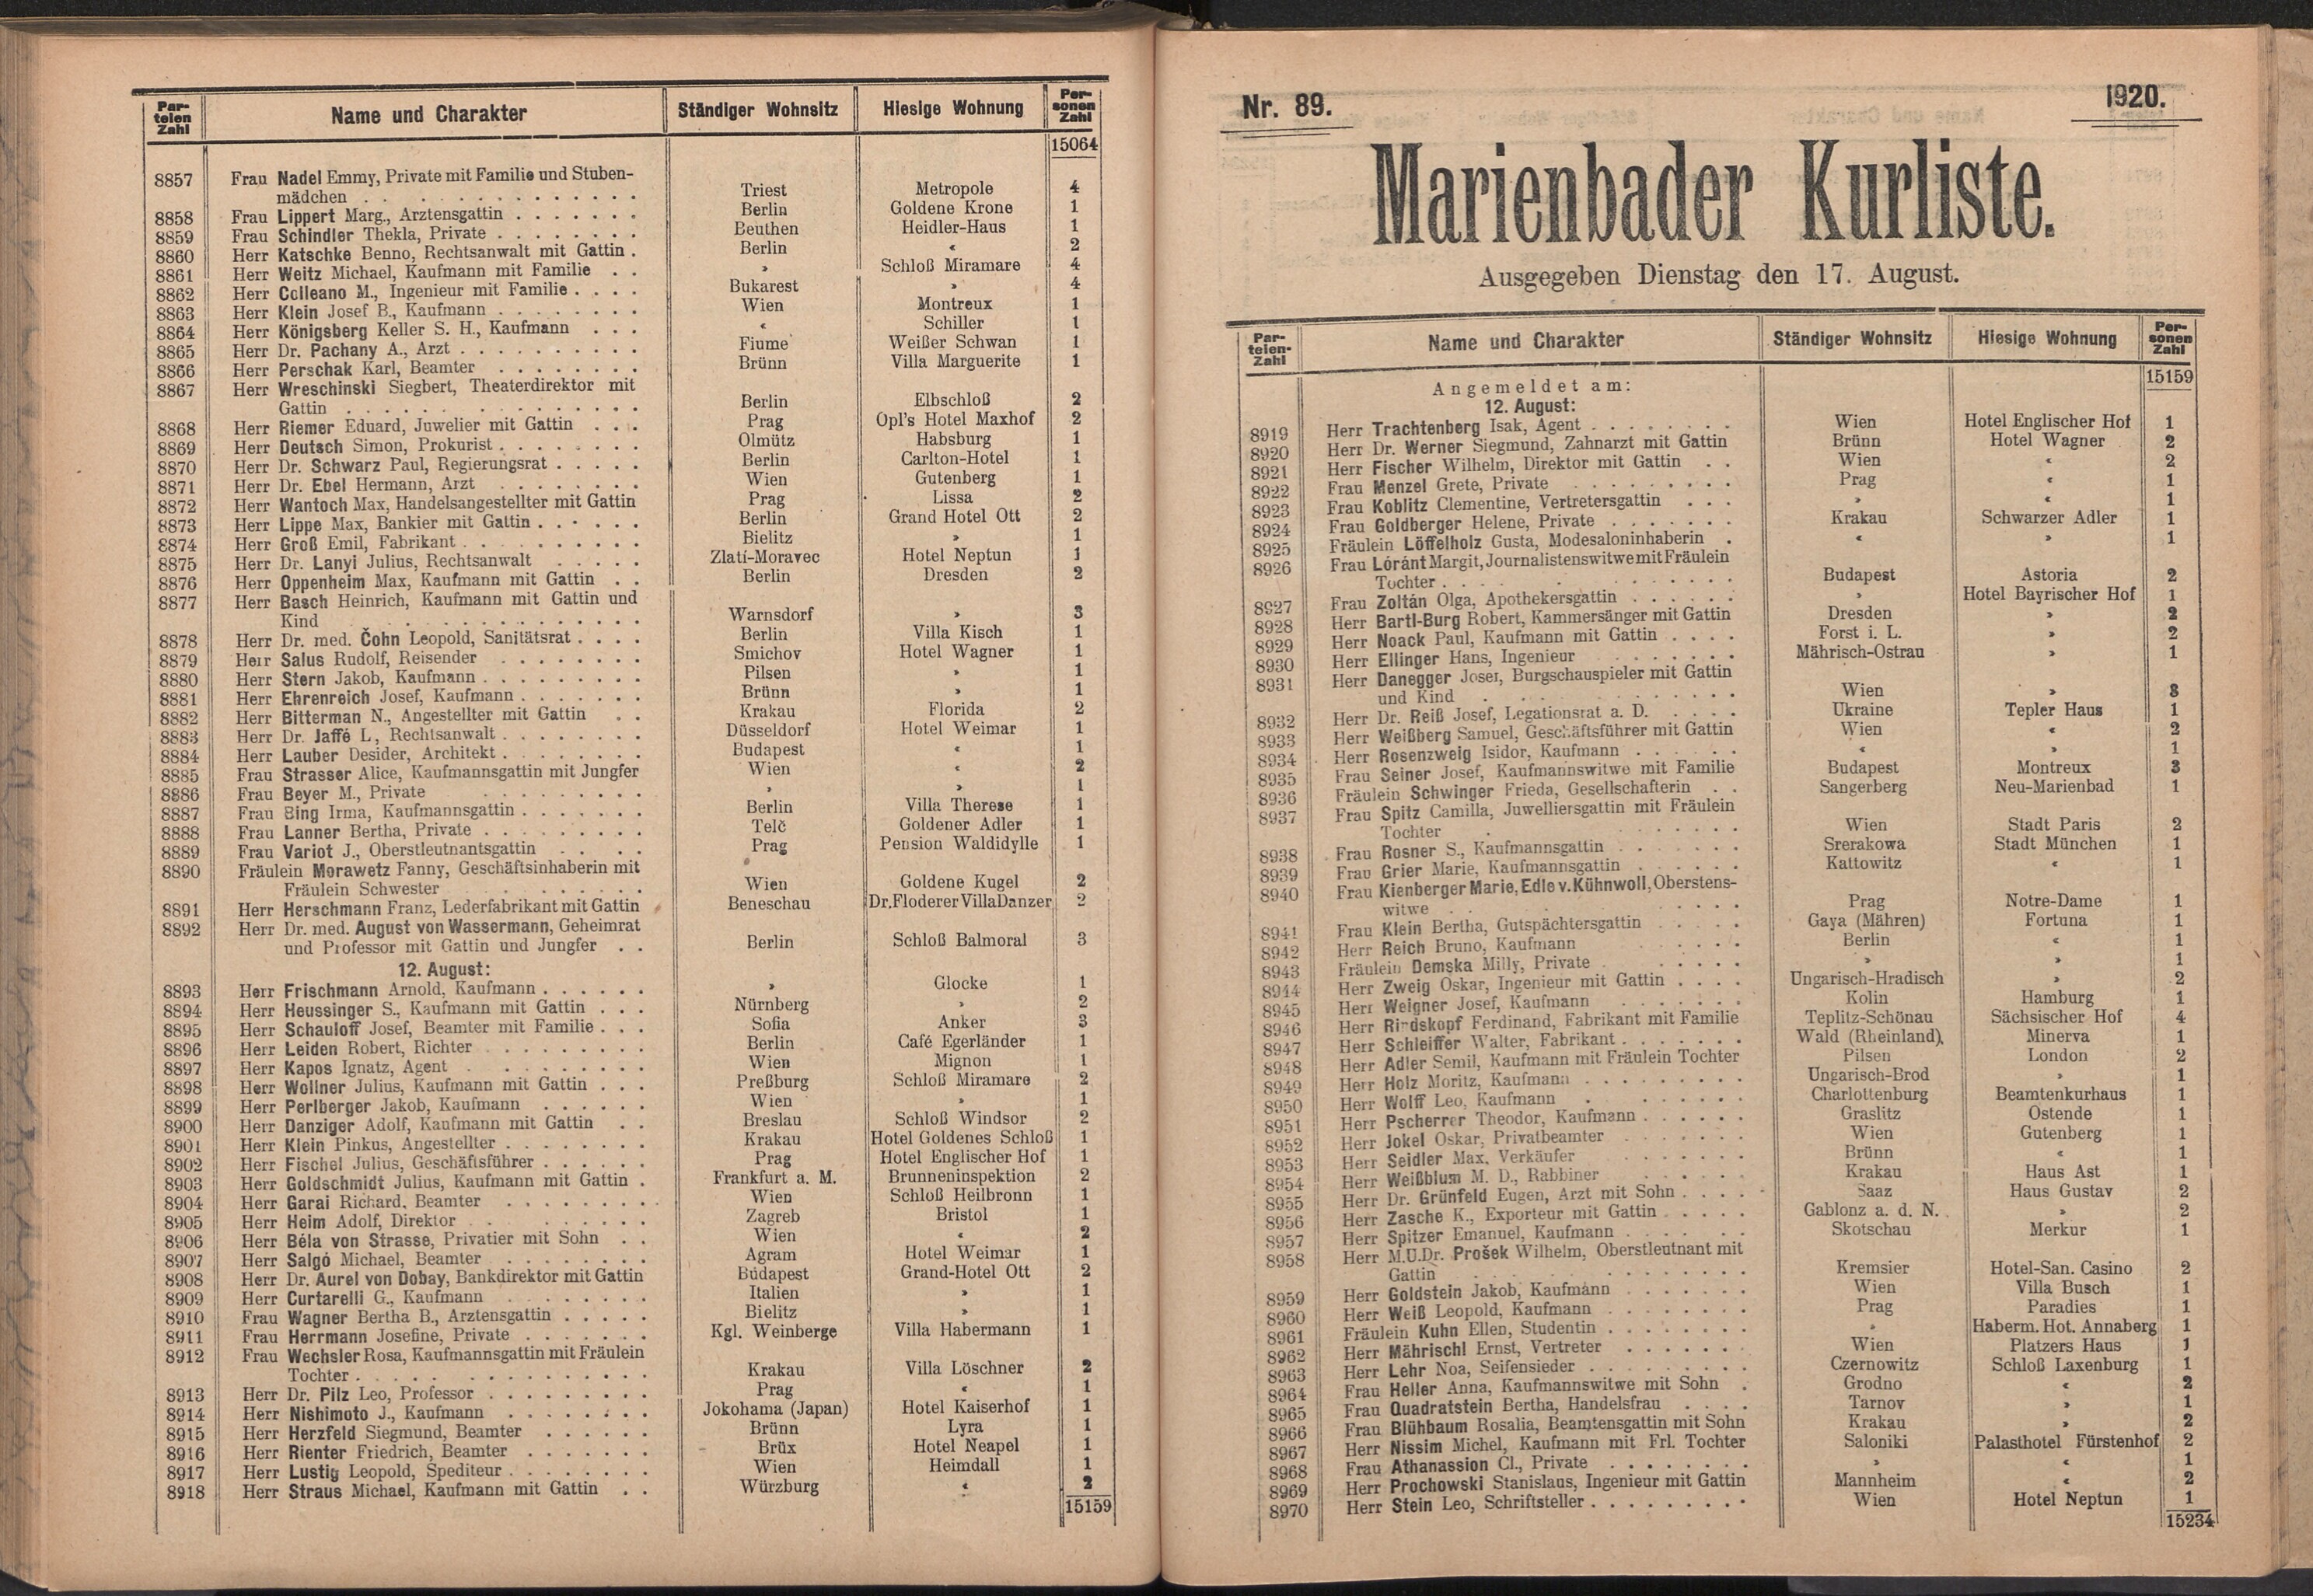 127. soap-ch_knihovna_marienbader-kurliste-1920_1270